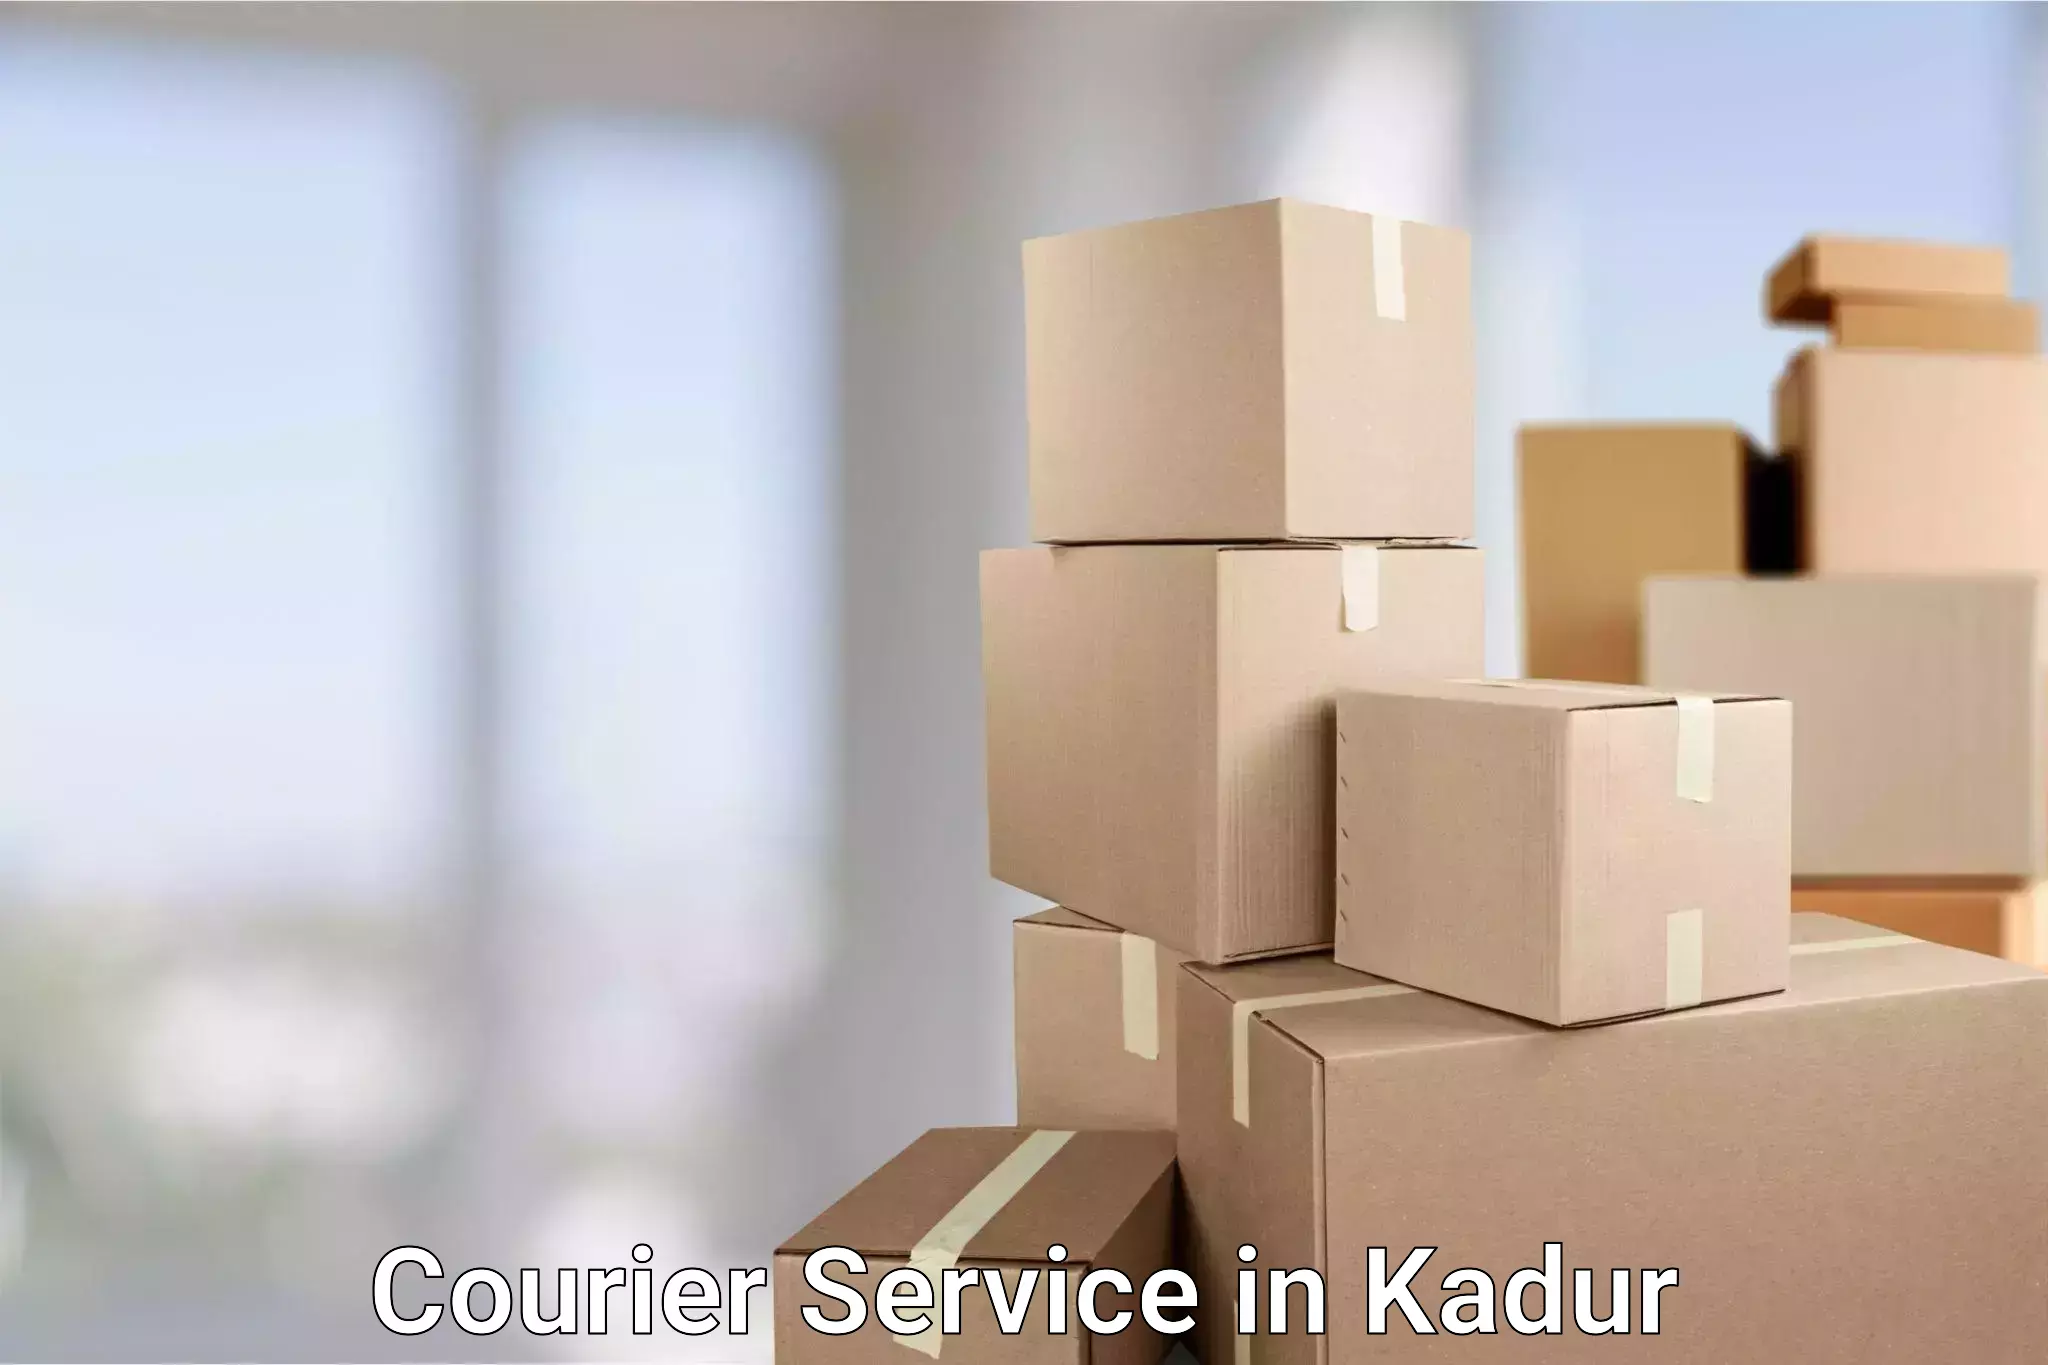 Express courier facilities in Kadur